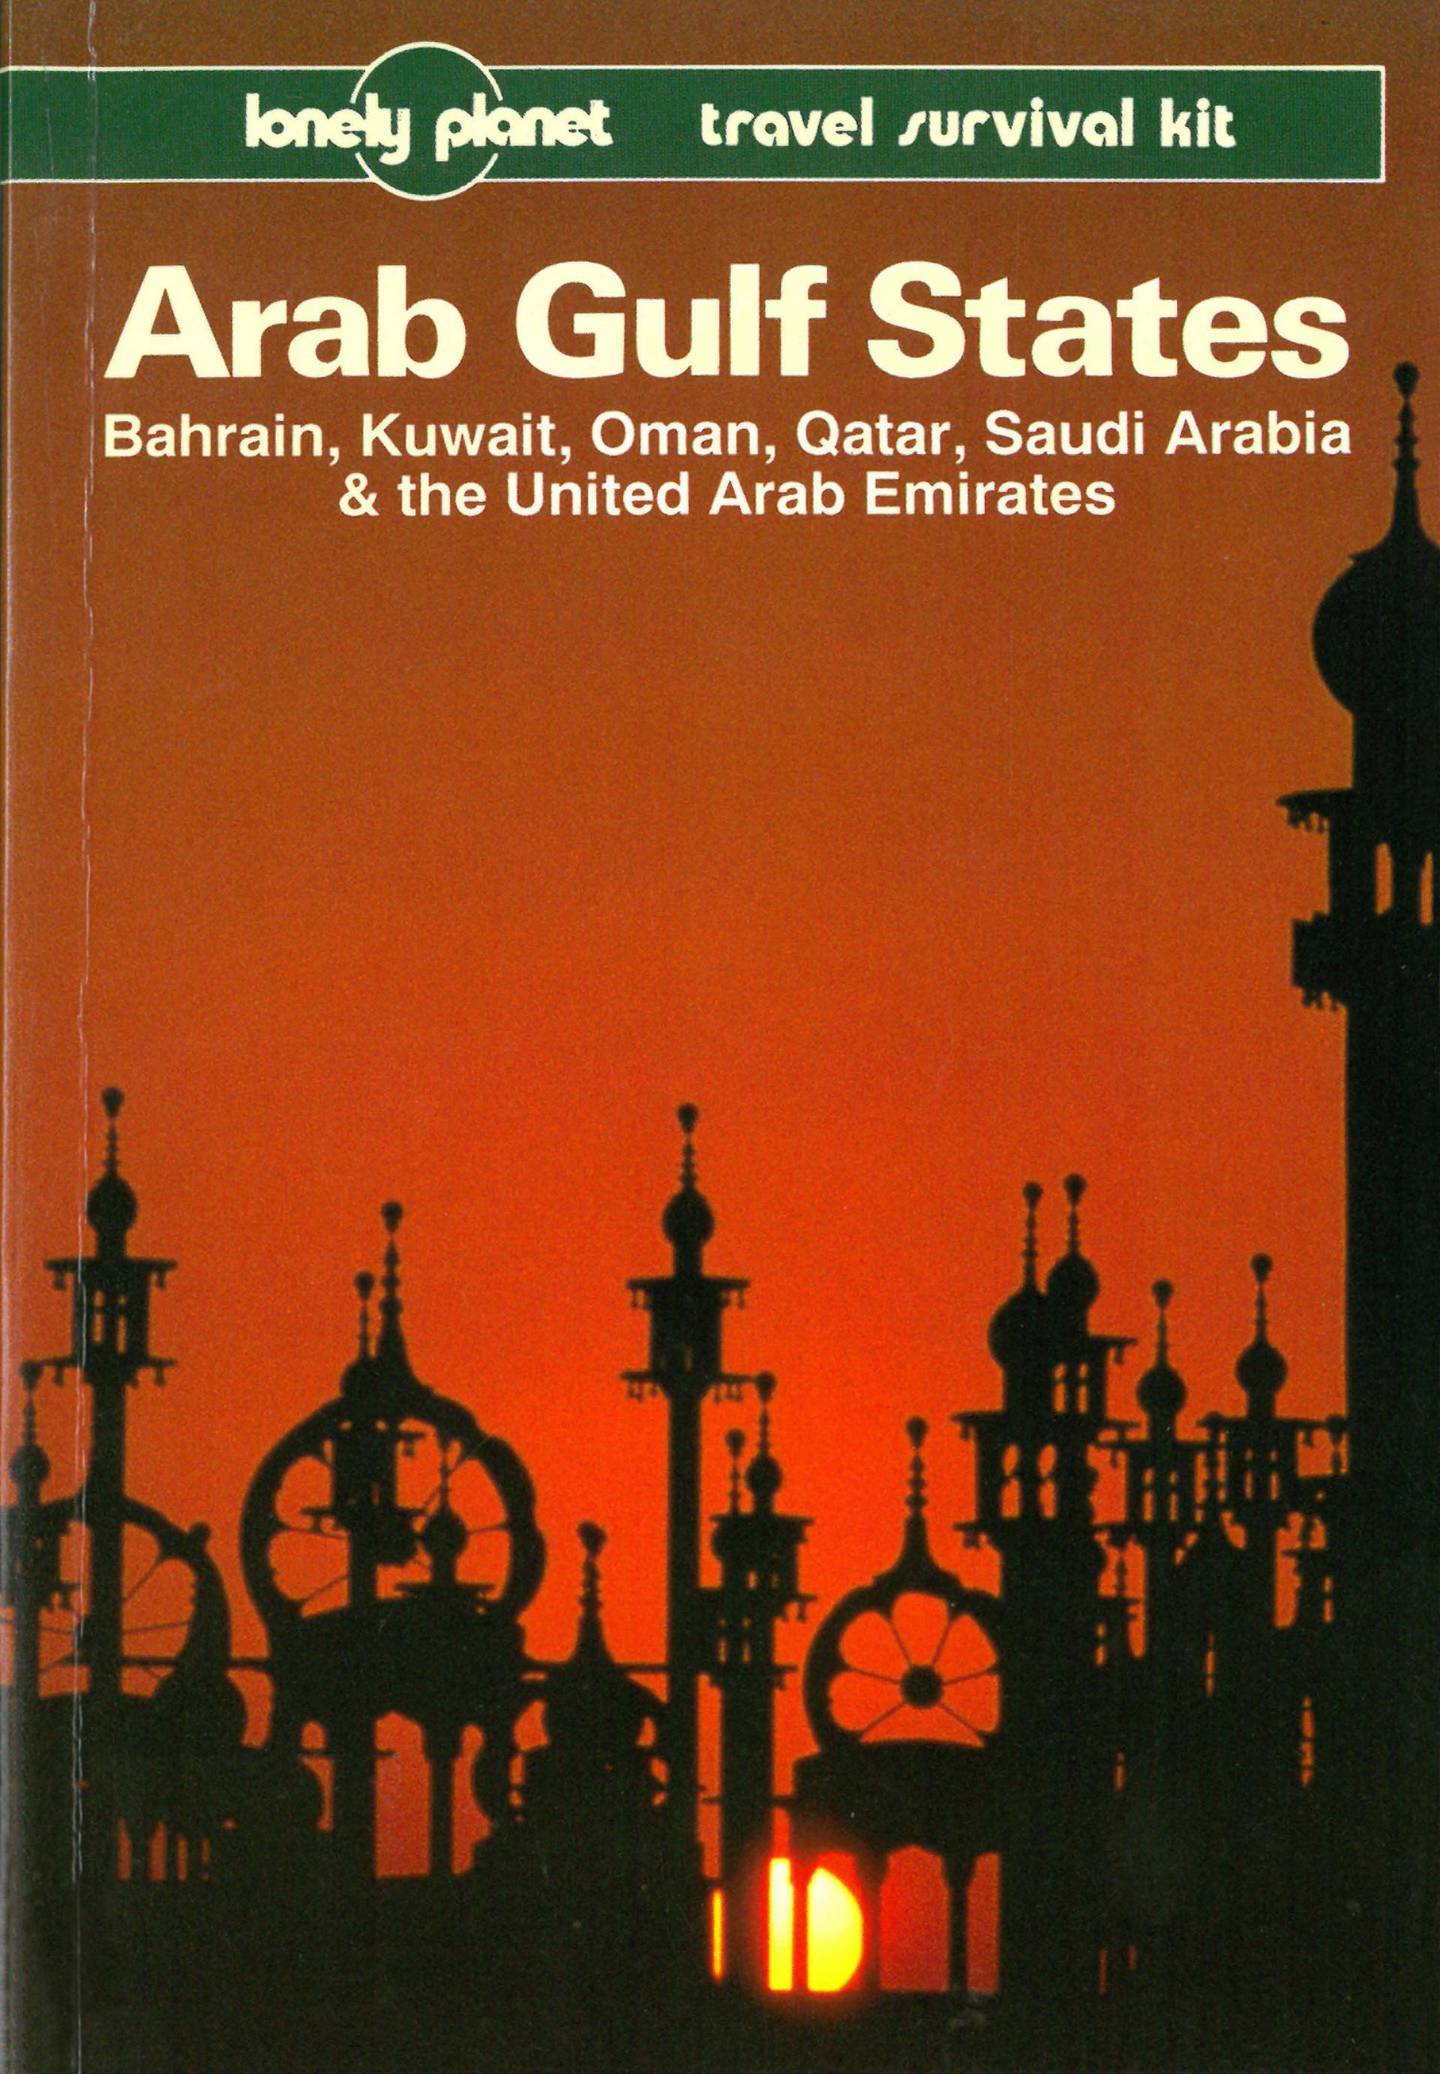 Arab Gulf States, 1993. Courtesy Lonely Planet